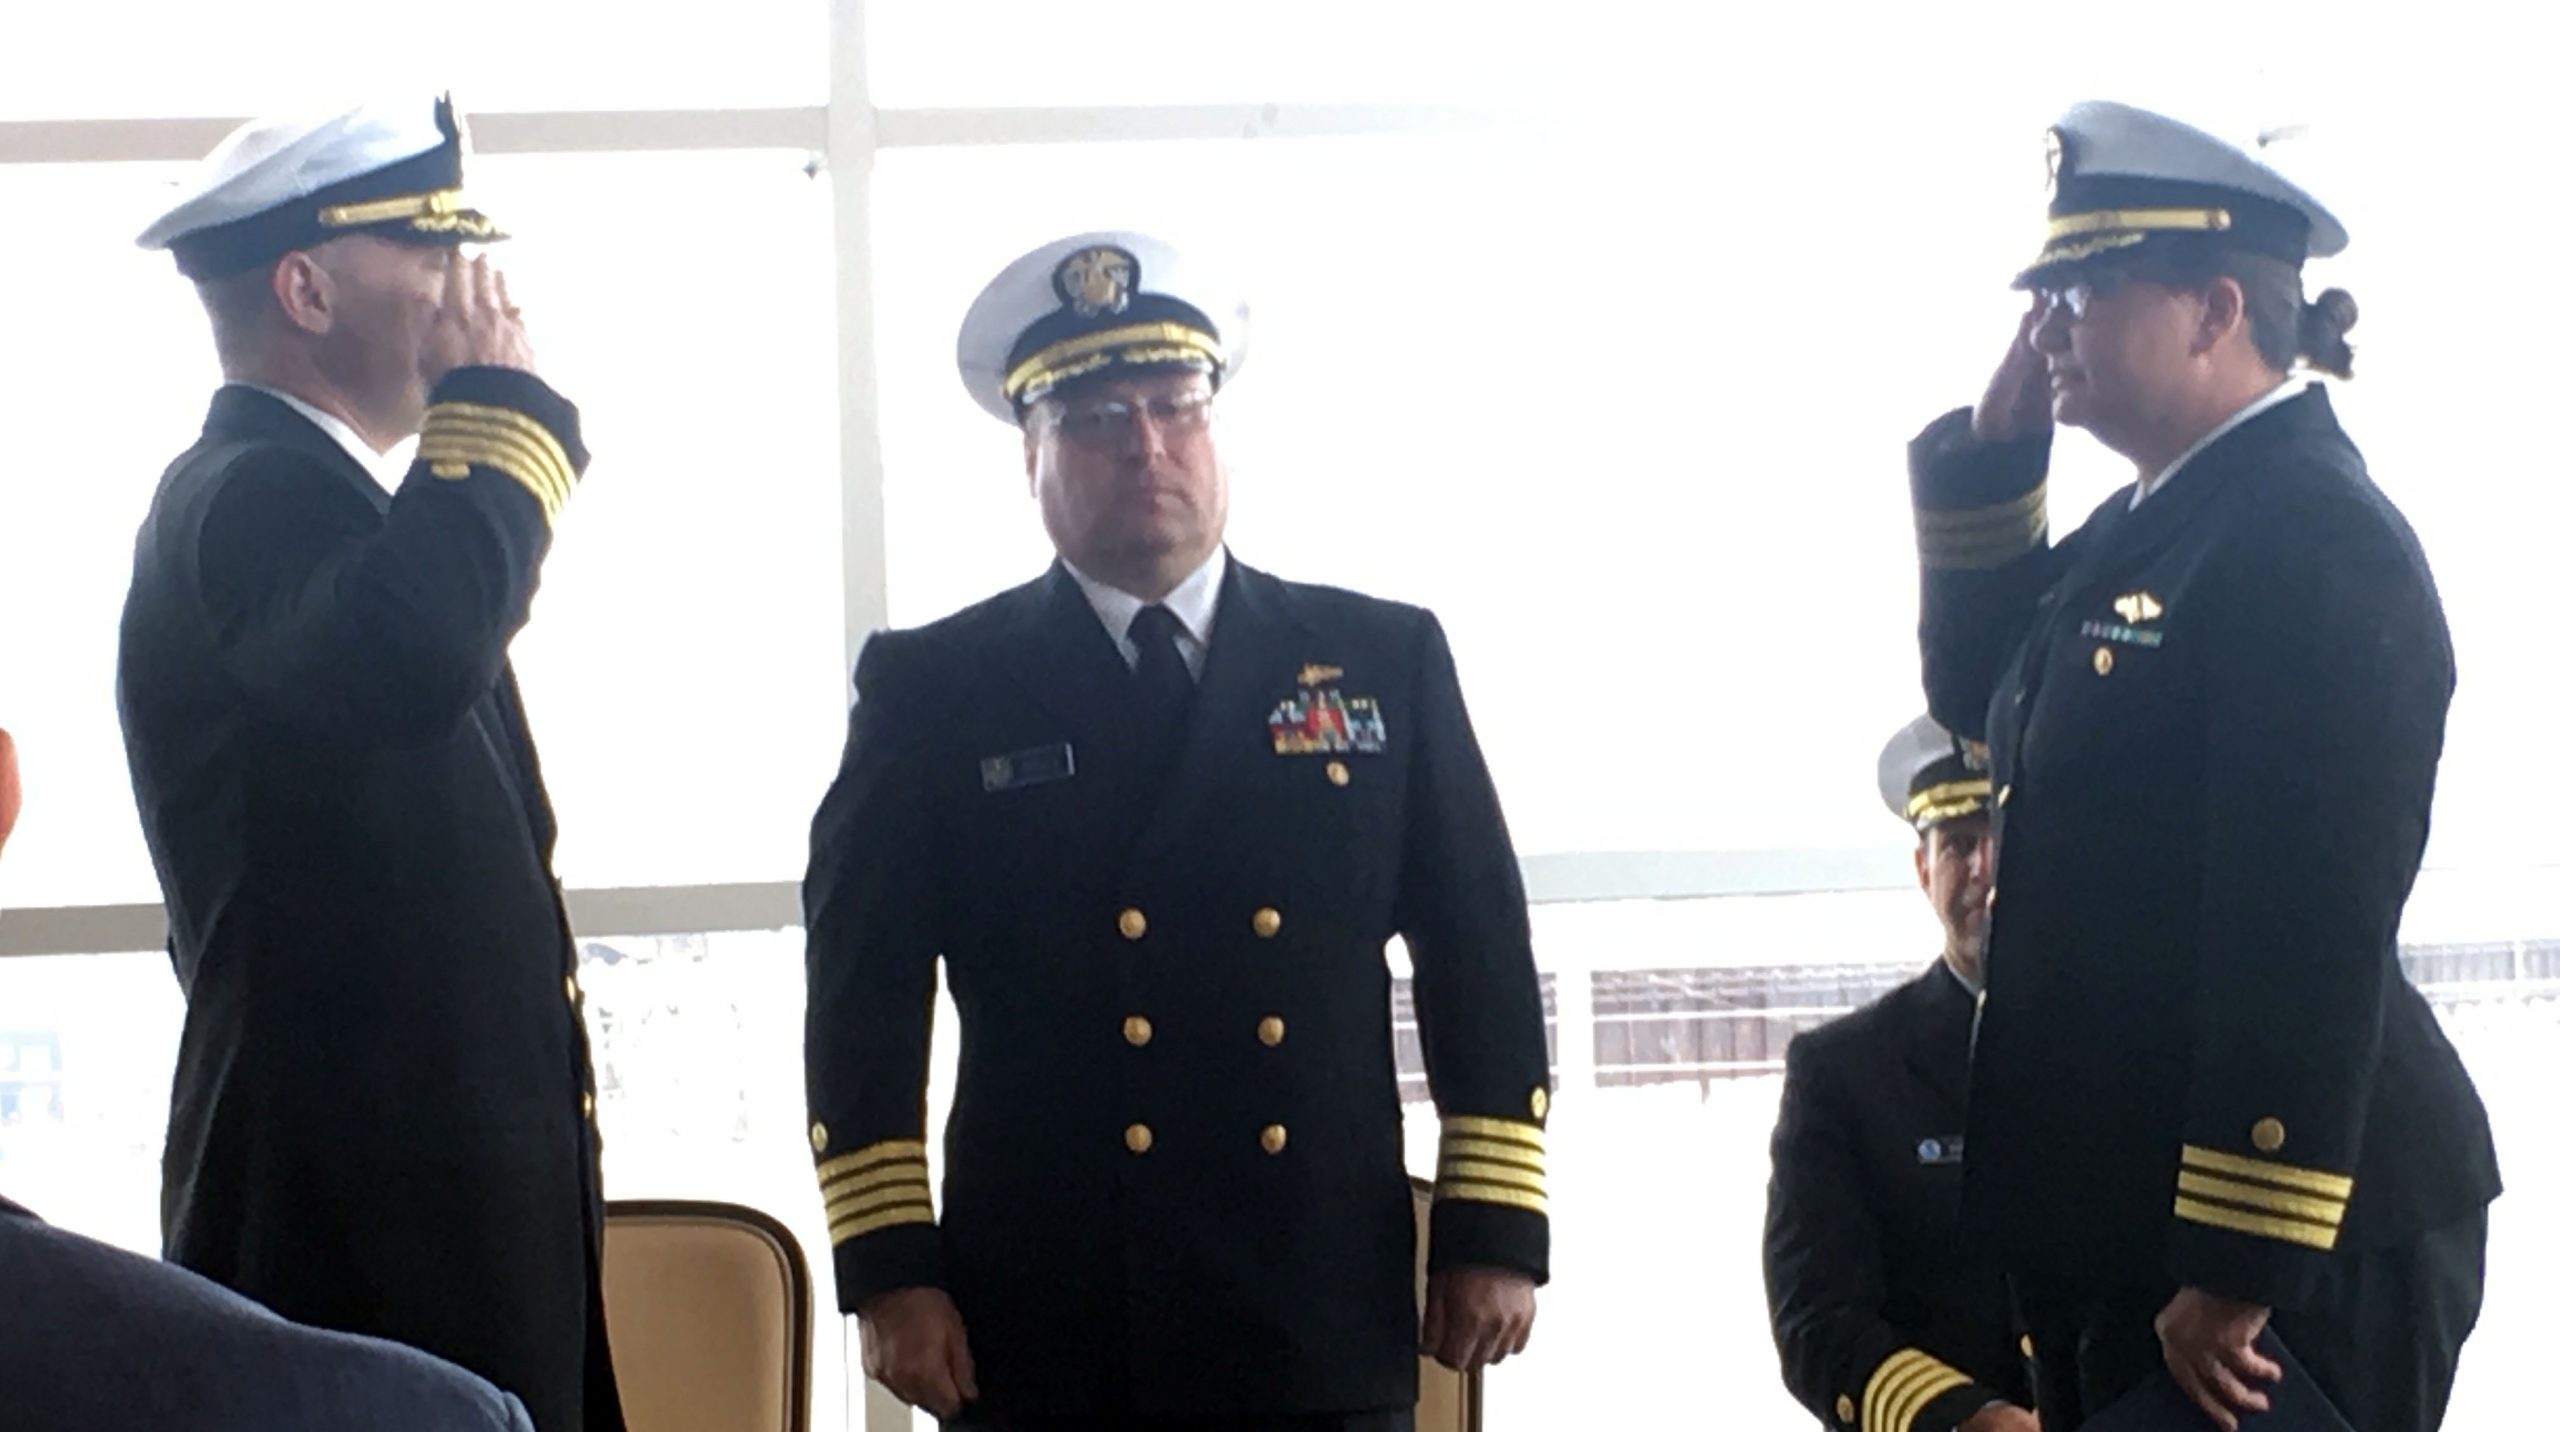 Capt. Chris van Westendorp and Cmdr. Briana Welton Hillstrom salute with Capt. Zezula looking on.